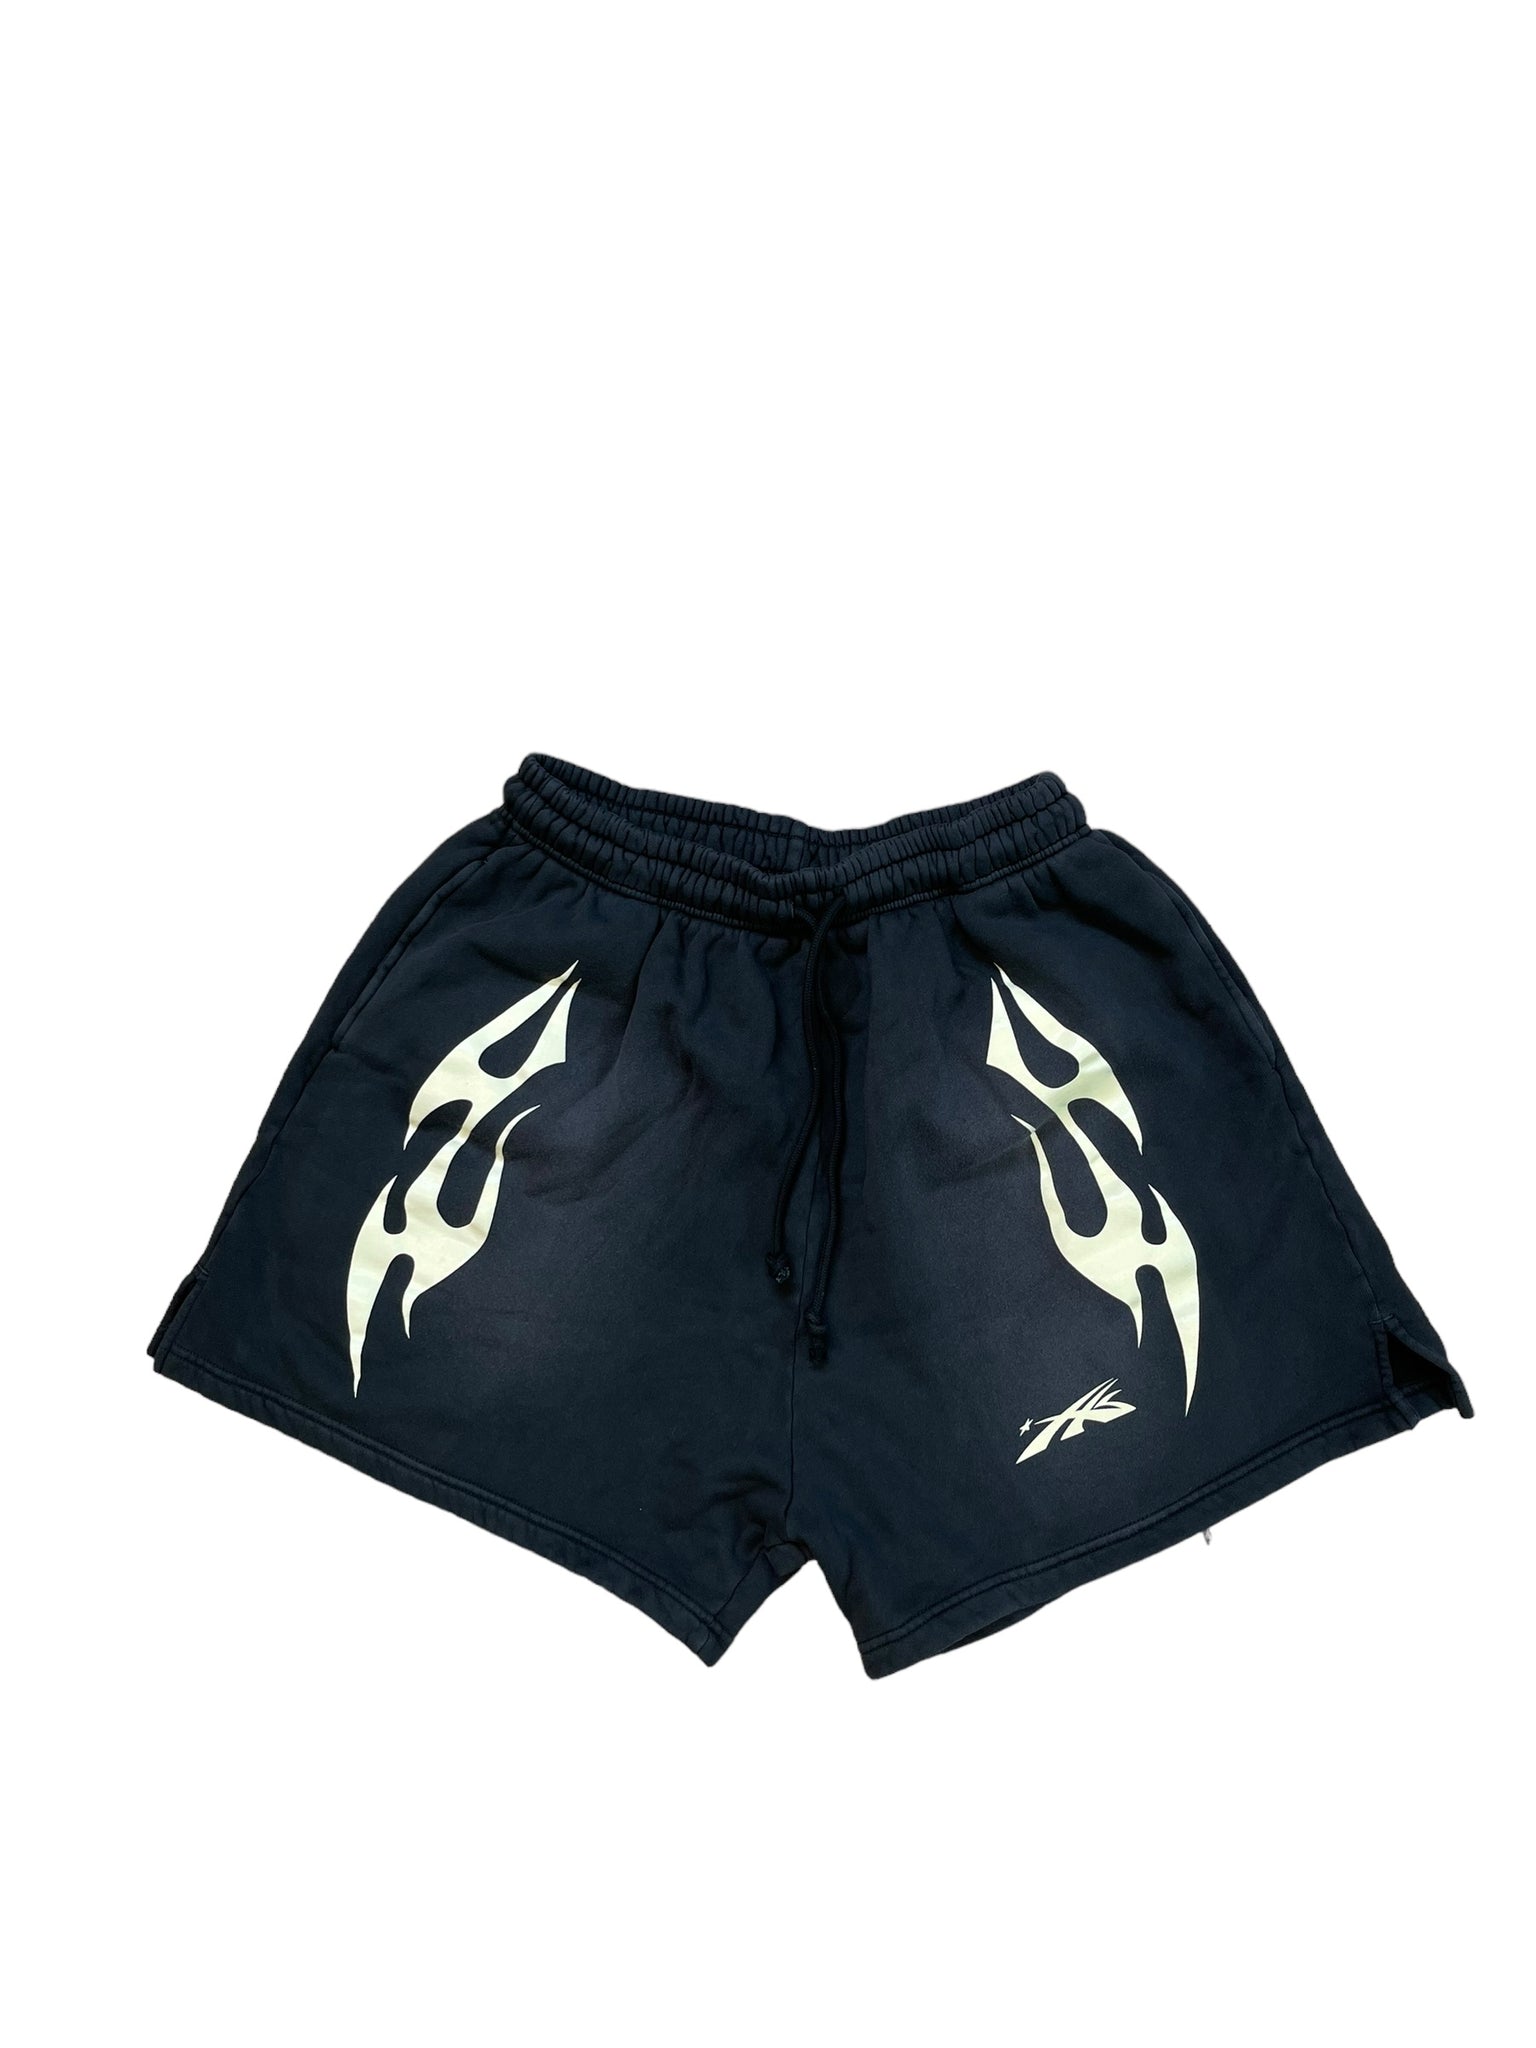 Hellstar Tribal Shorts "Washed Black"